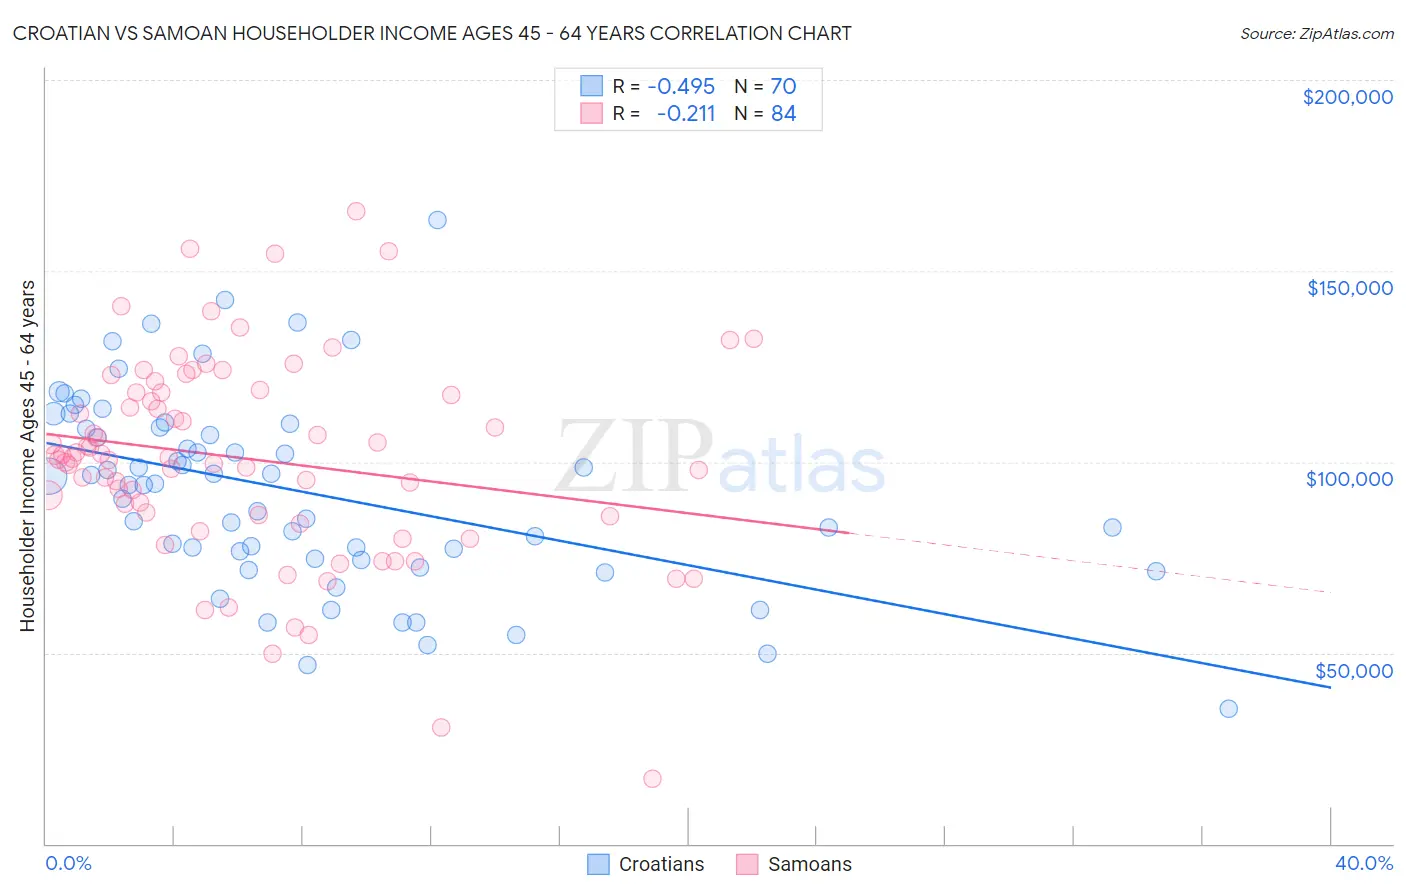 Croatian vs Samoan Householder Income Ages 45 - 64 years